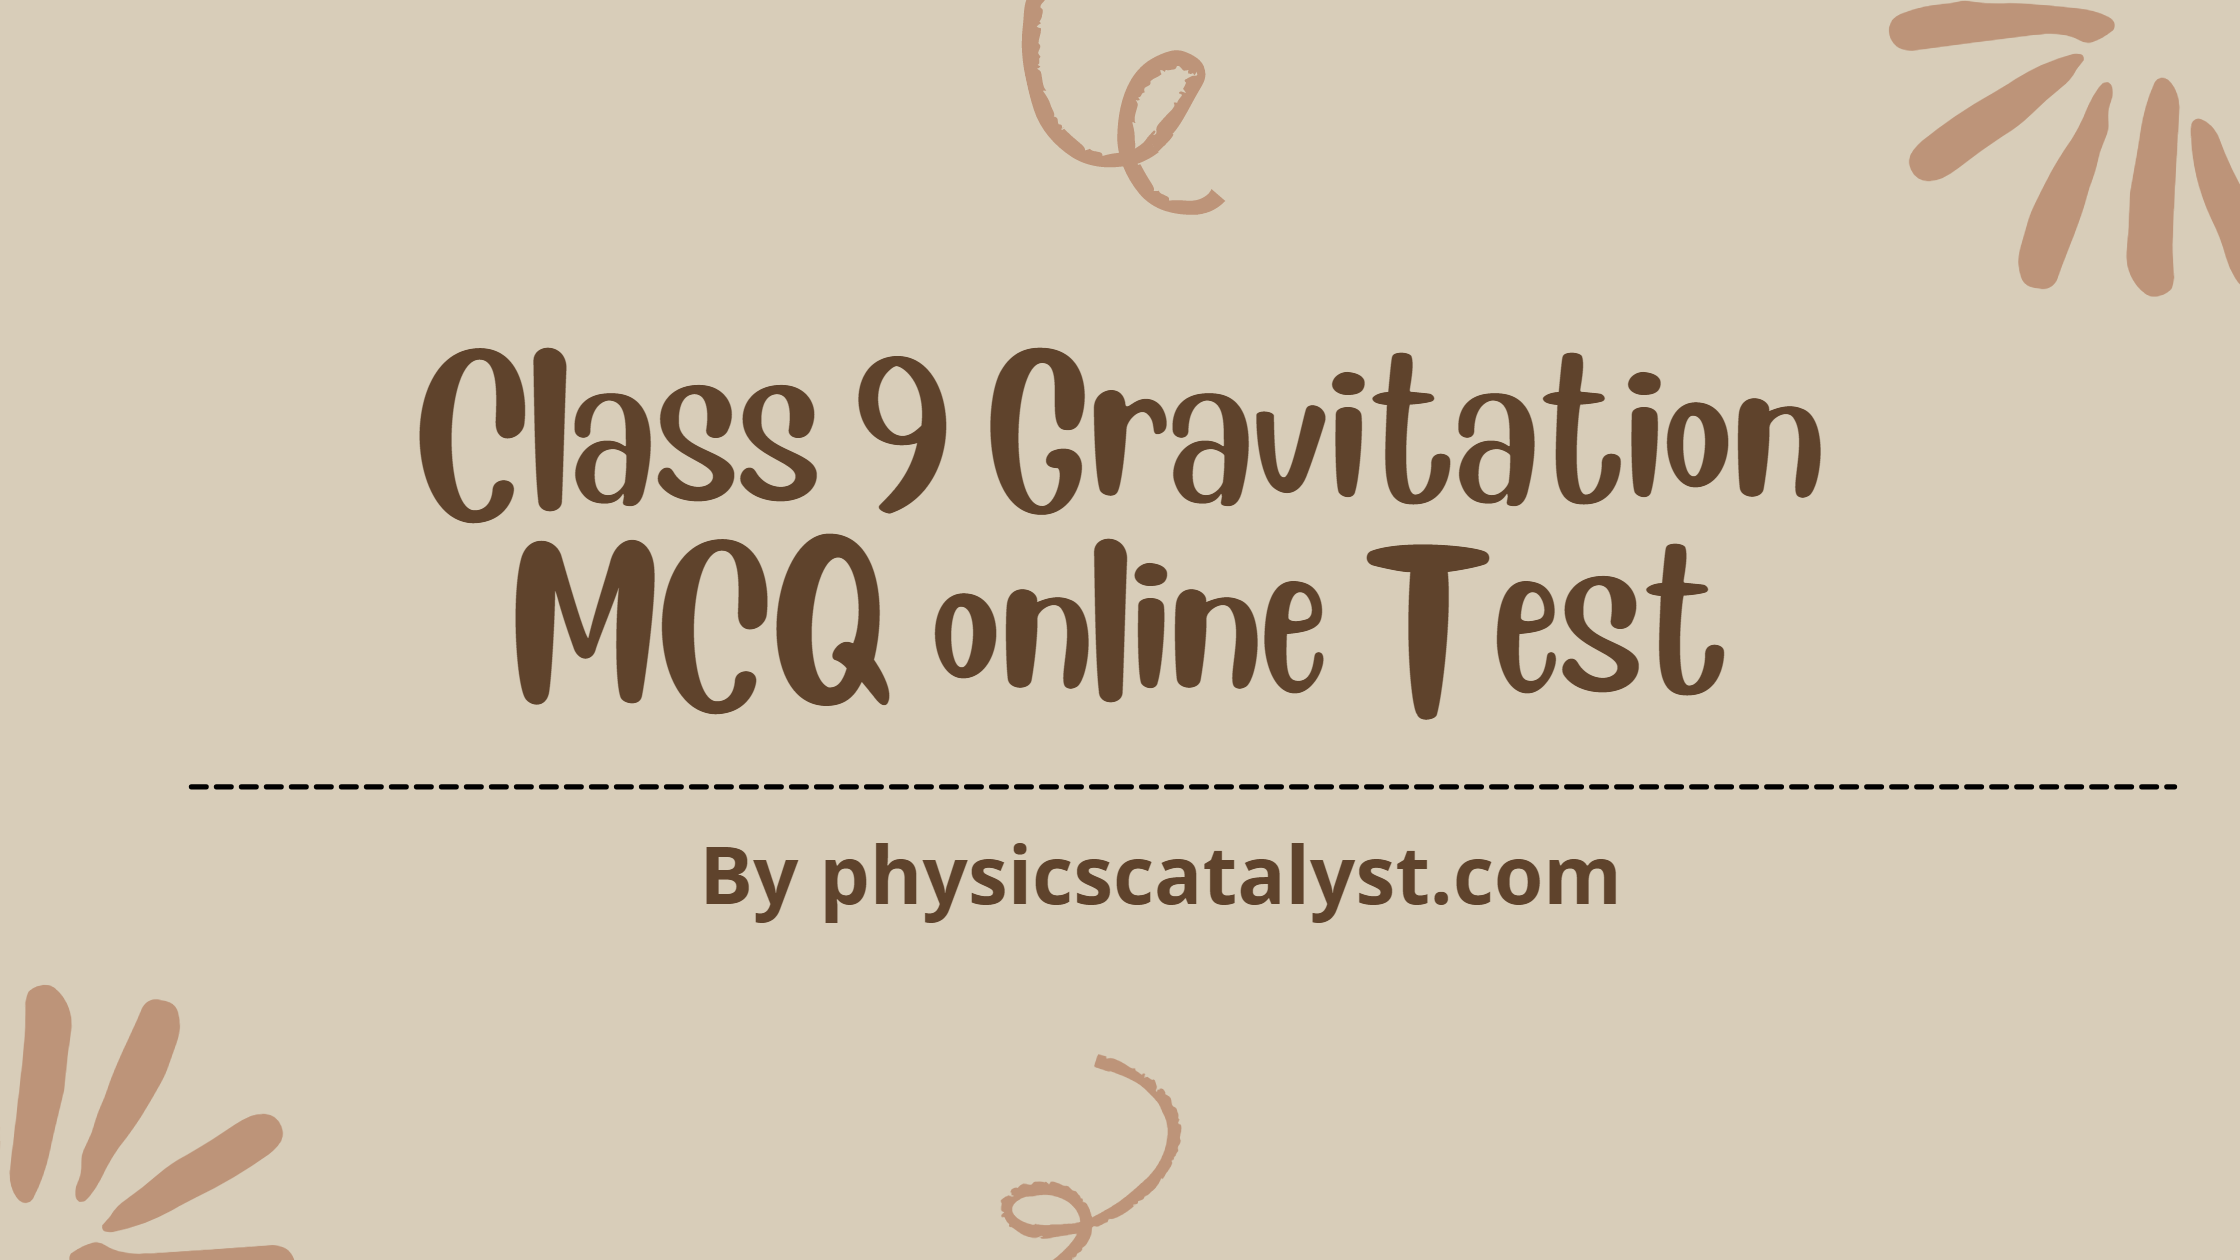 Gravitation class 9 mcqs blog banner